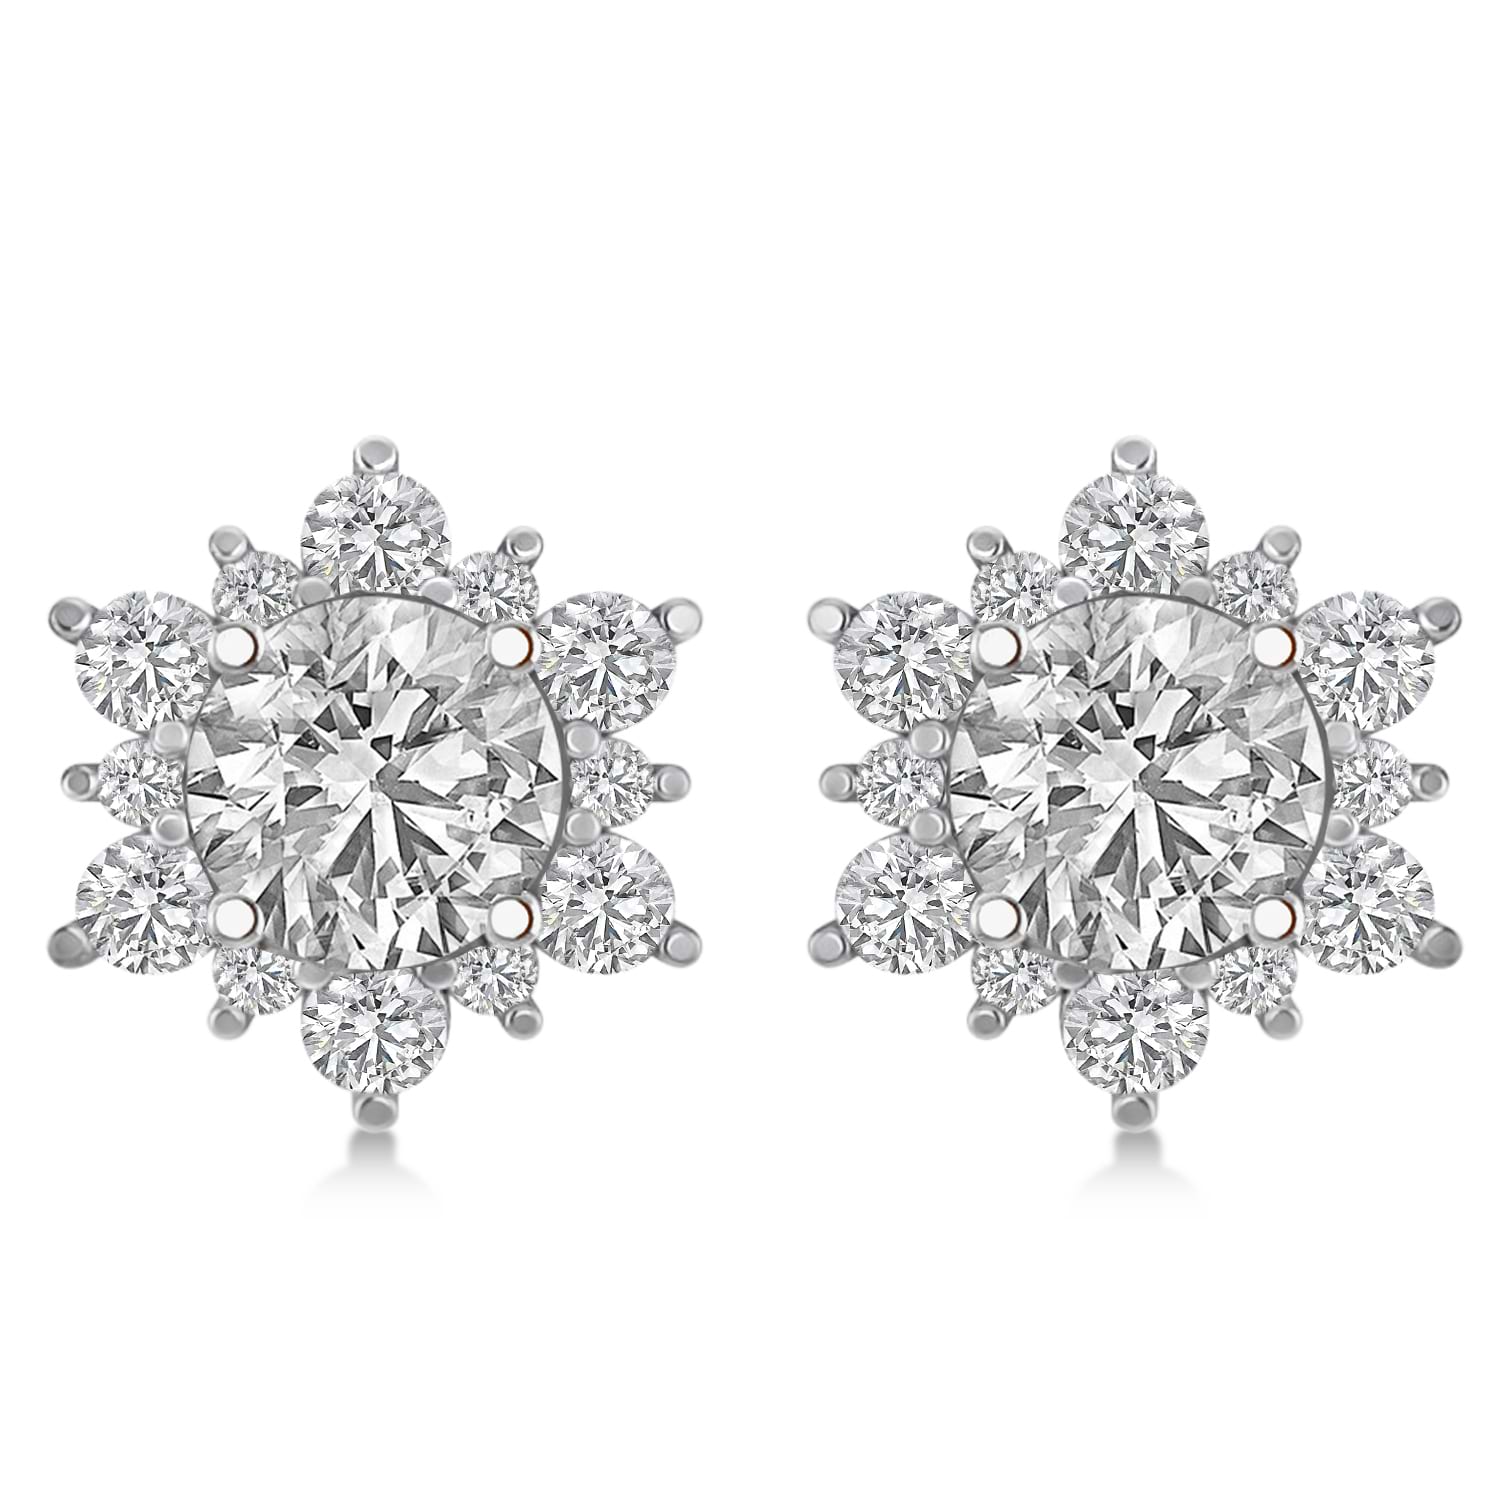 Diamond Flower Halo Earring Jackets 14k White Gold (1.20ct)